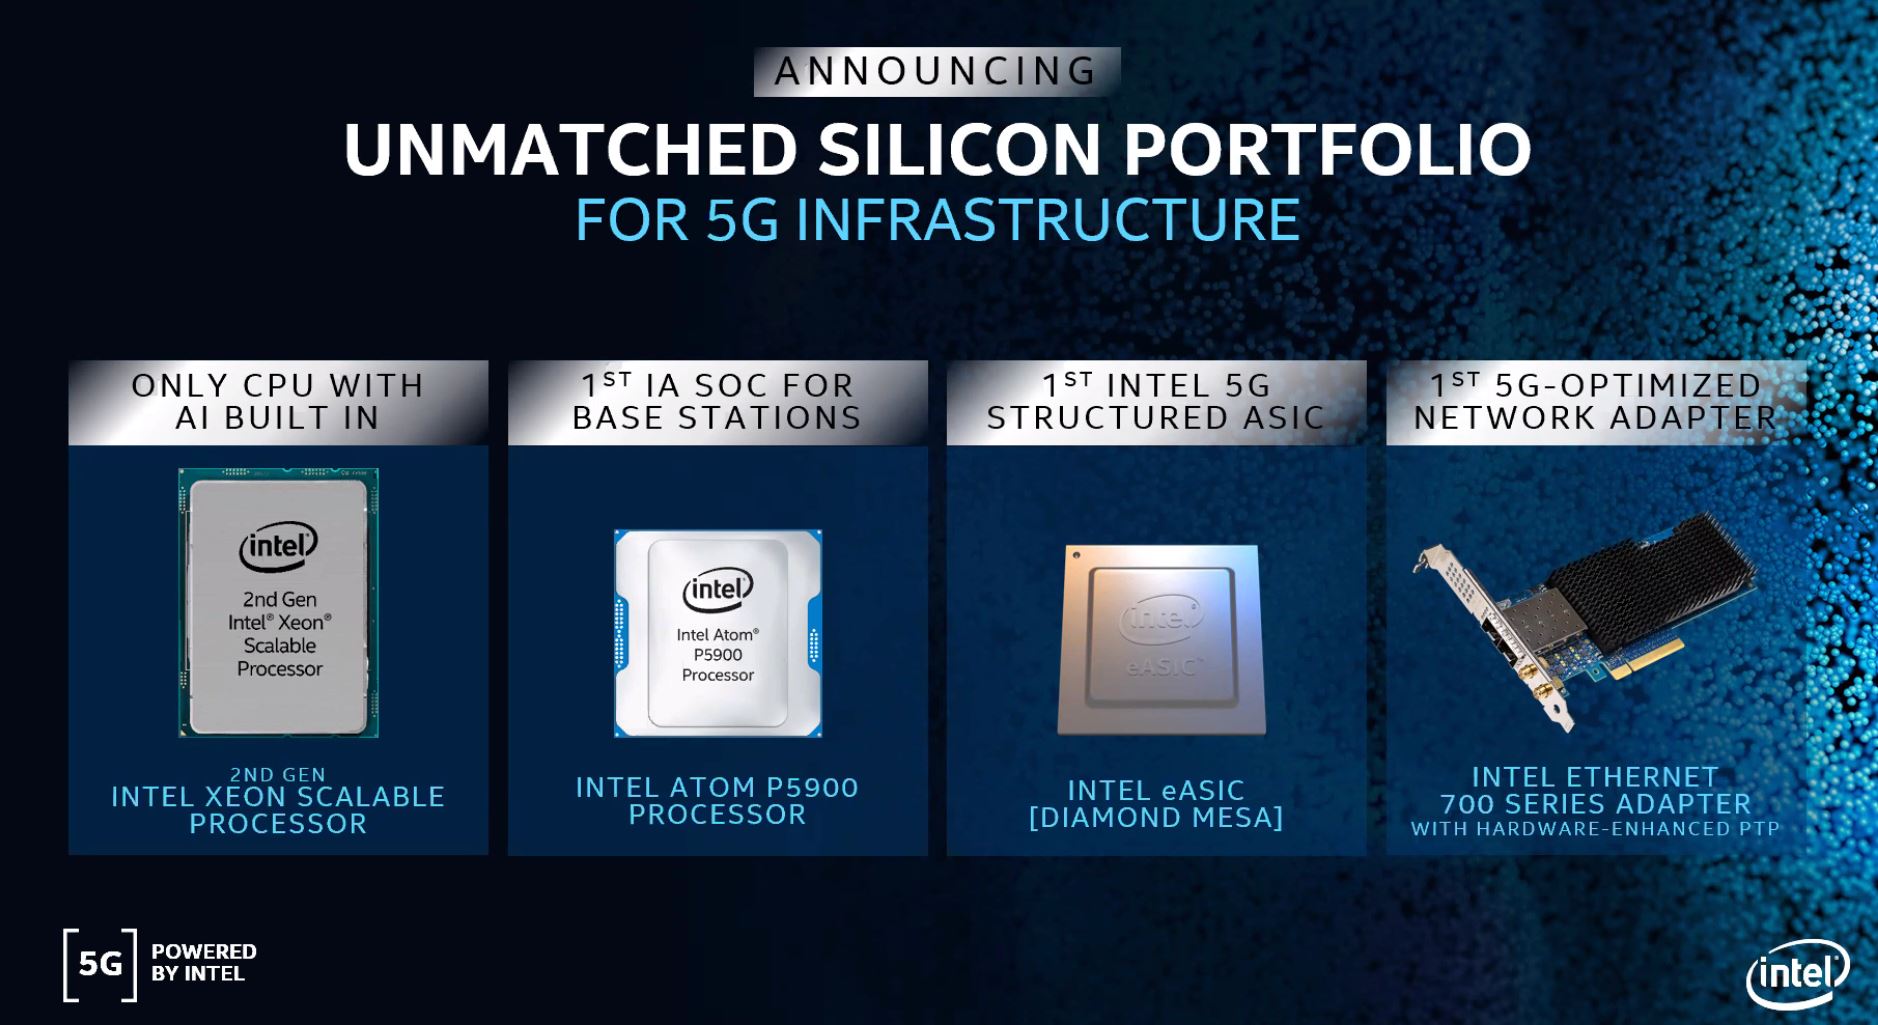 intel atom p5900 series along with easic diamond mesa and intel ethernet 700 with hardware ptp อินเทลเปิดตัวซีพียู Intel Atom P5900 ขนาดสถาปัตย์ 10nm SoC เน้นใช้งานโครงสร้างพื้นฐานเครือข่ายระบบ 5G 